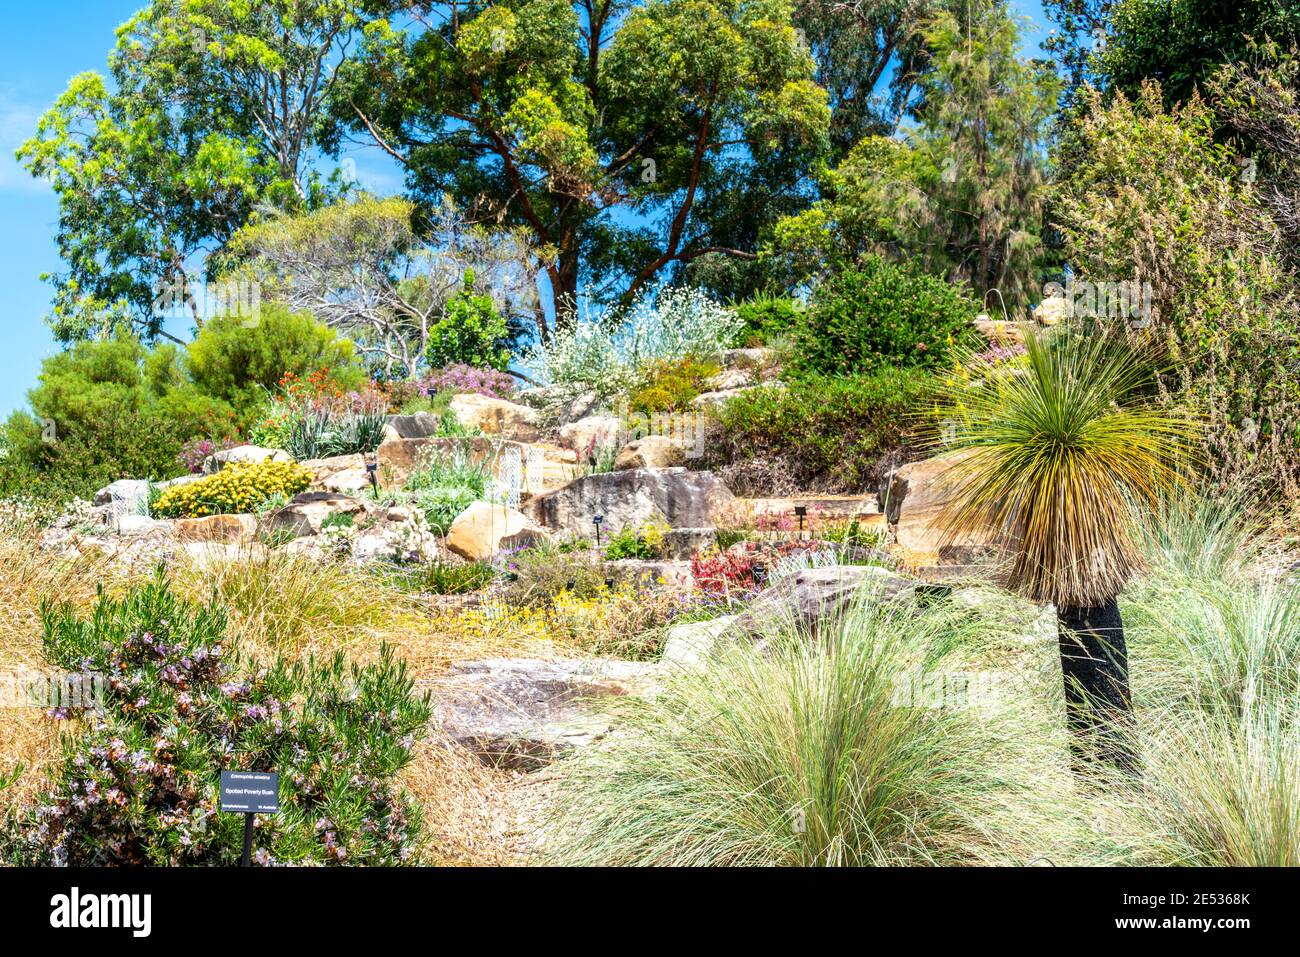 Australian native garden ground covers and shrubs in a terraced sandstone rock garden Stock Photo